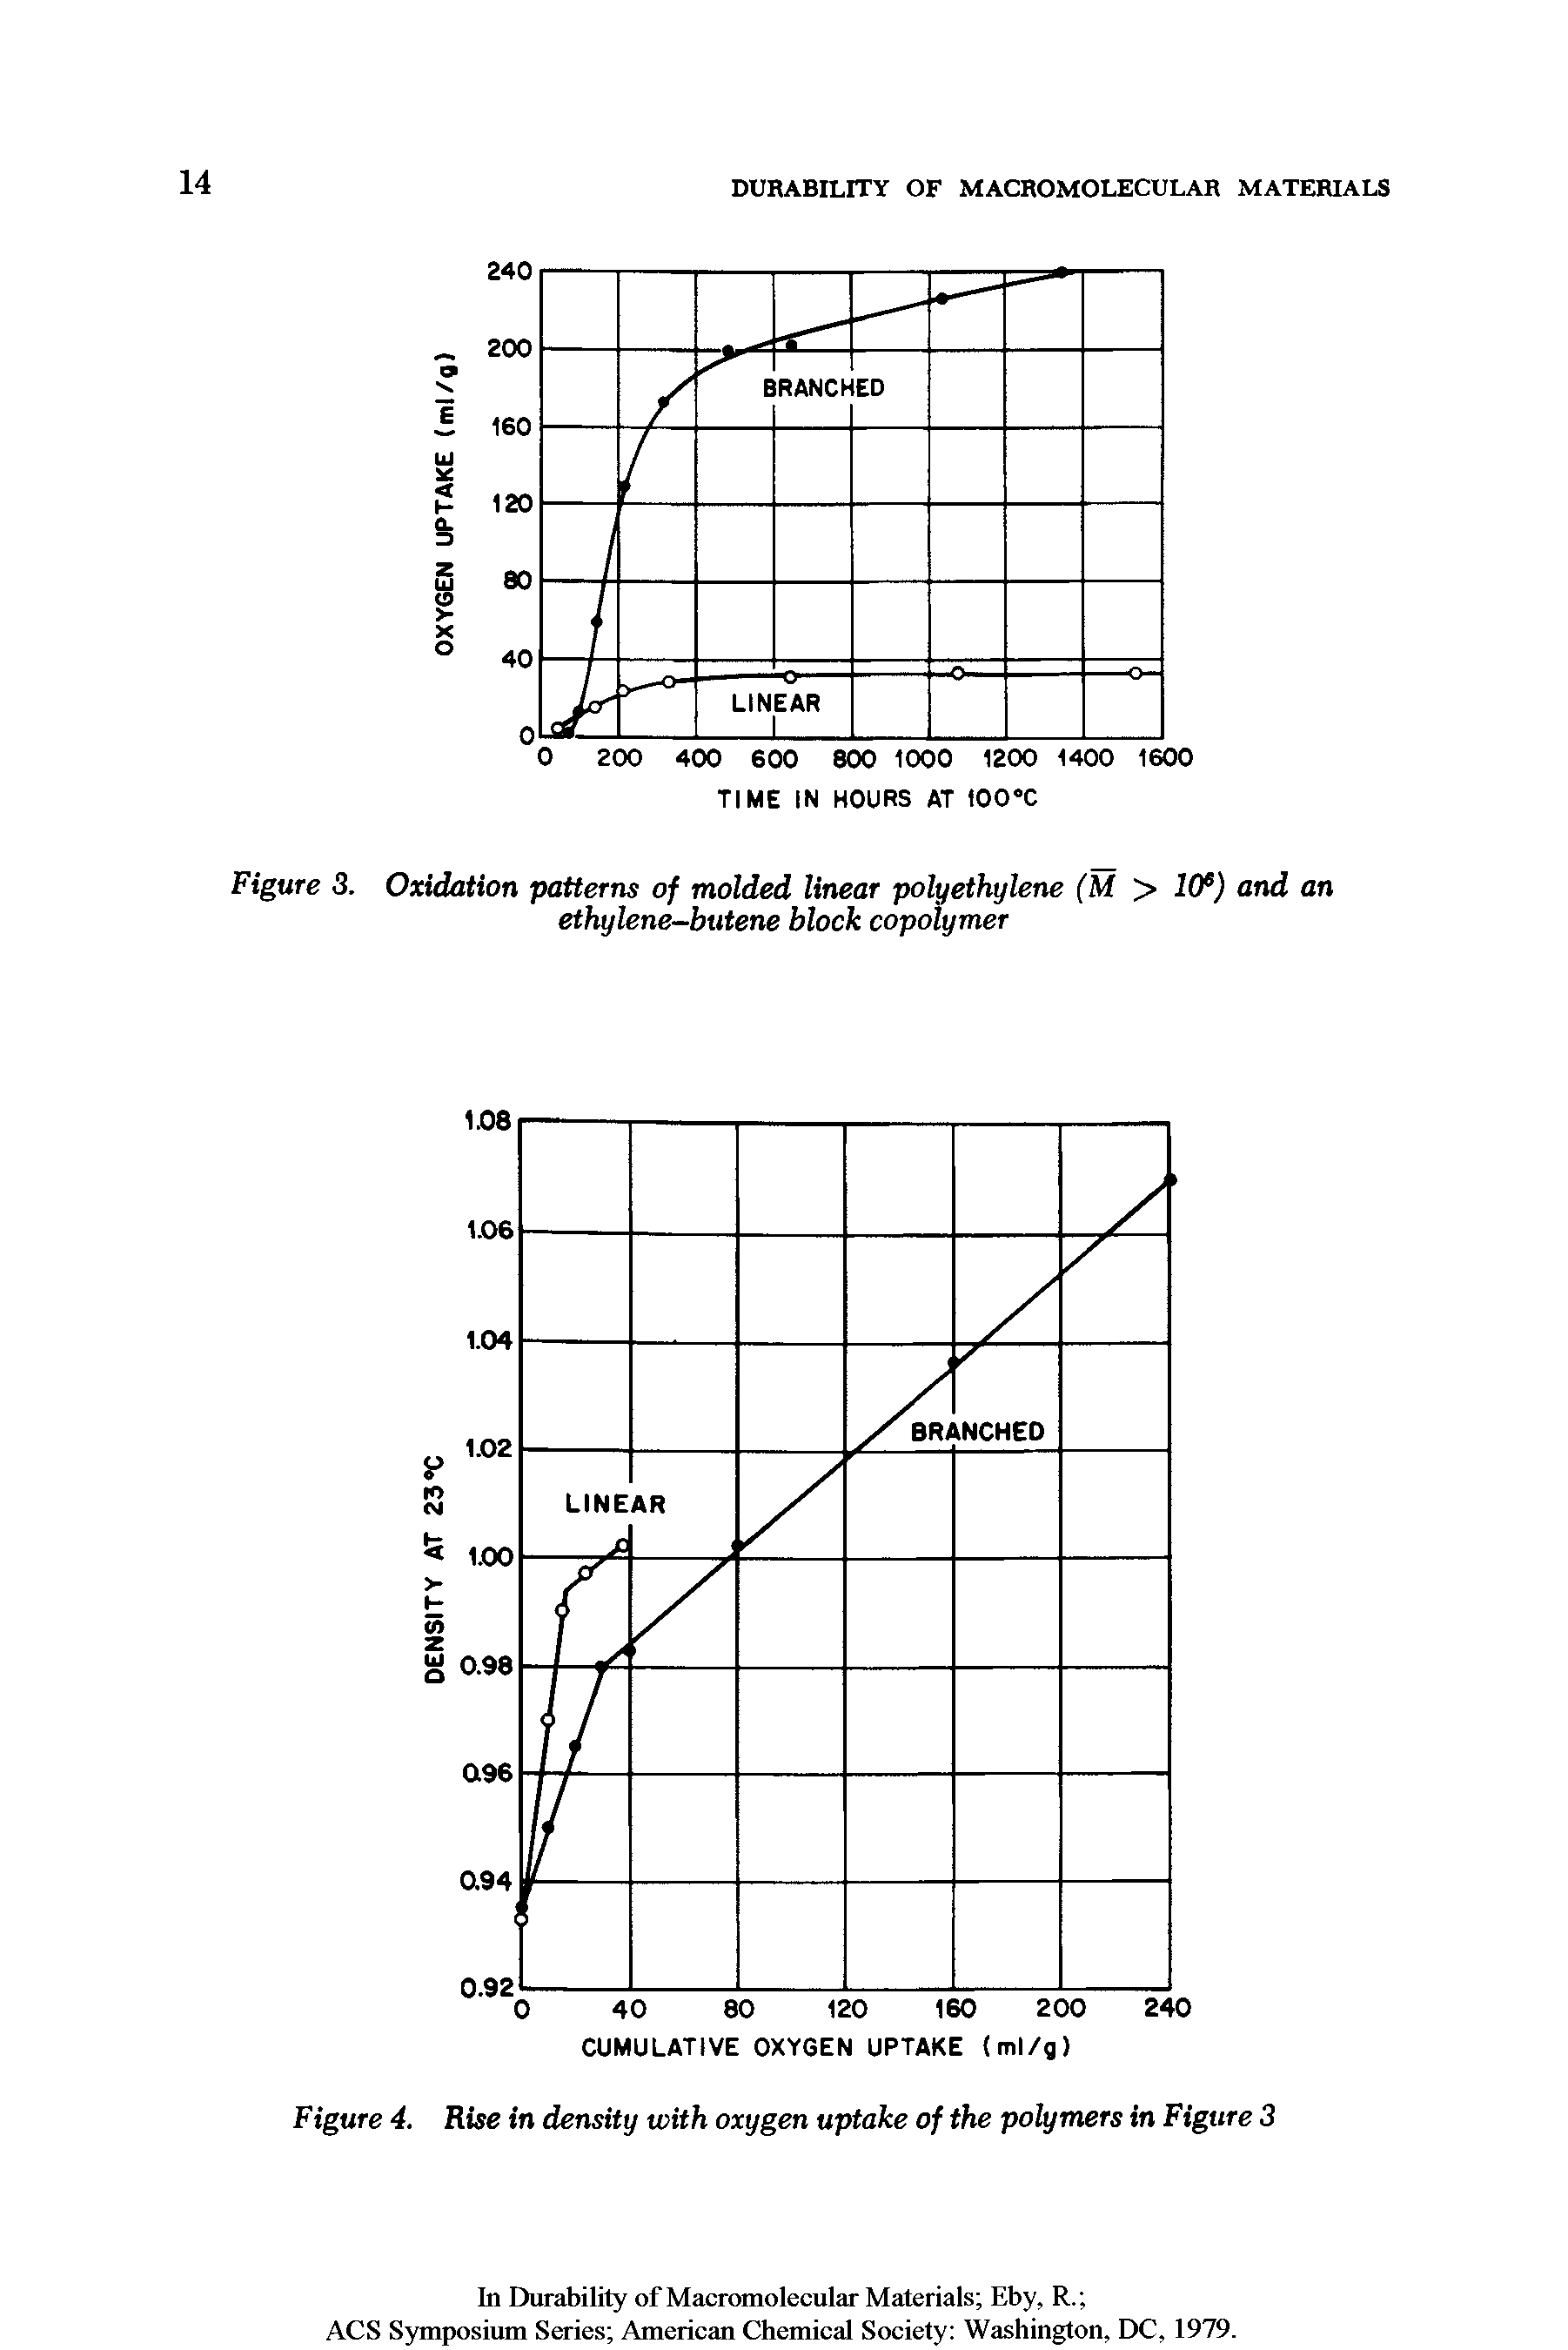 Figure 3. Oxidation patterns of molded linear polyethylene (M > l(fi) and an ethylene-butene block copolymer...